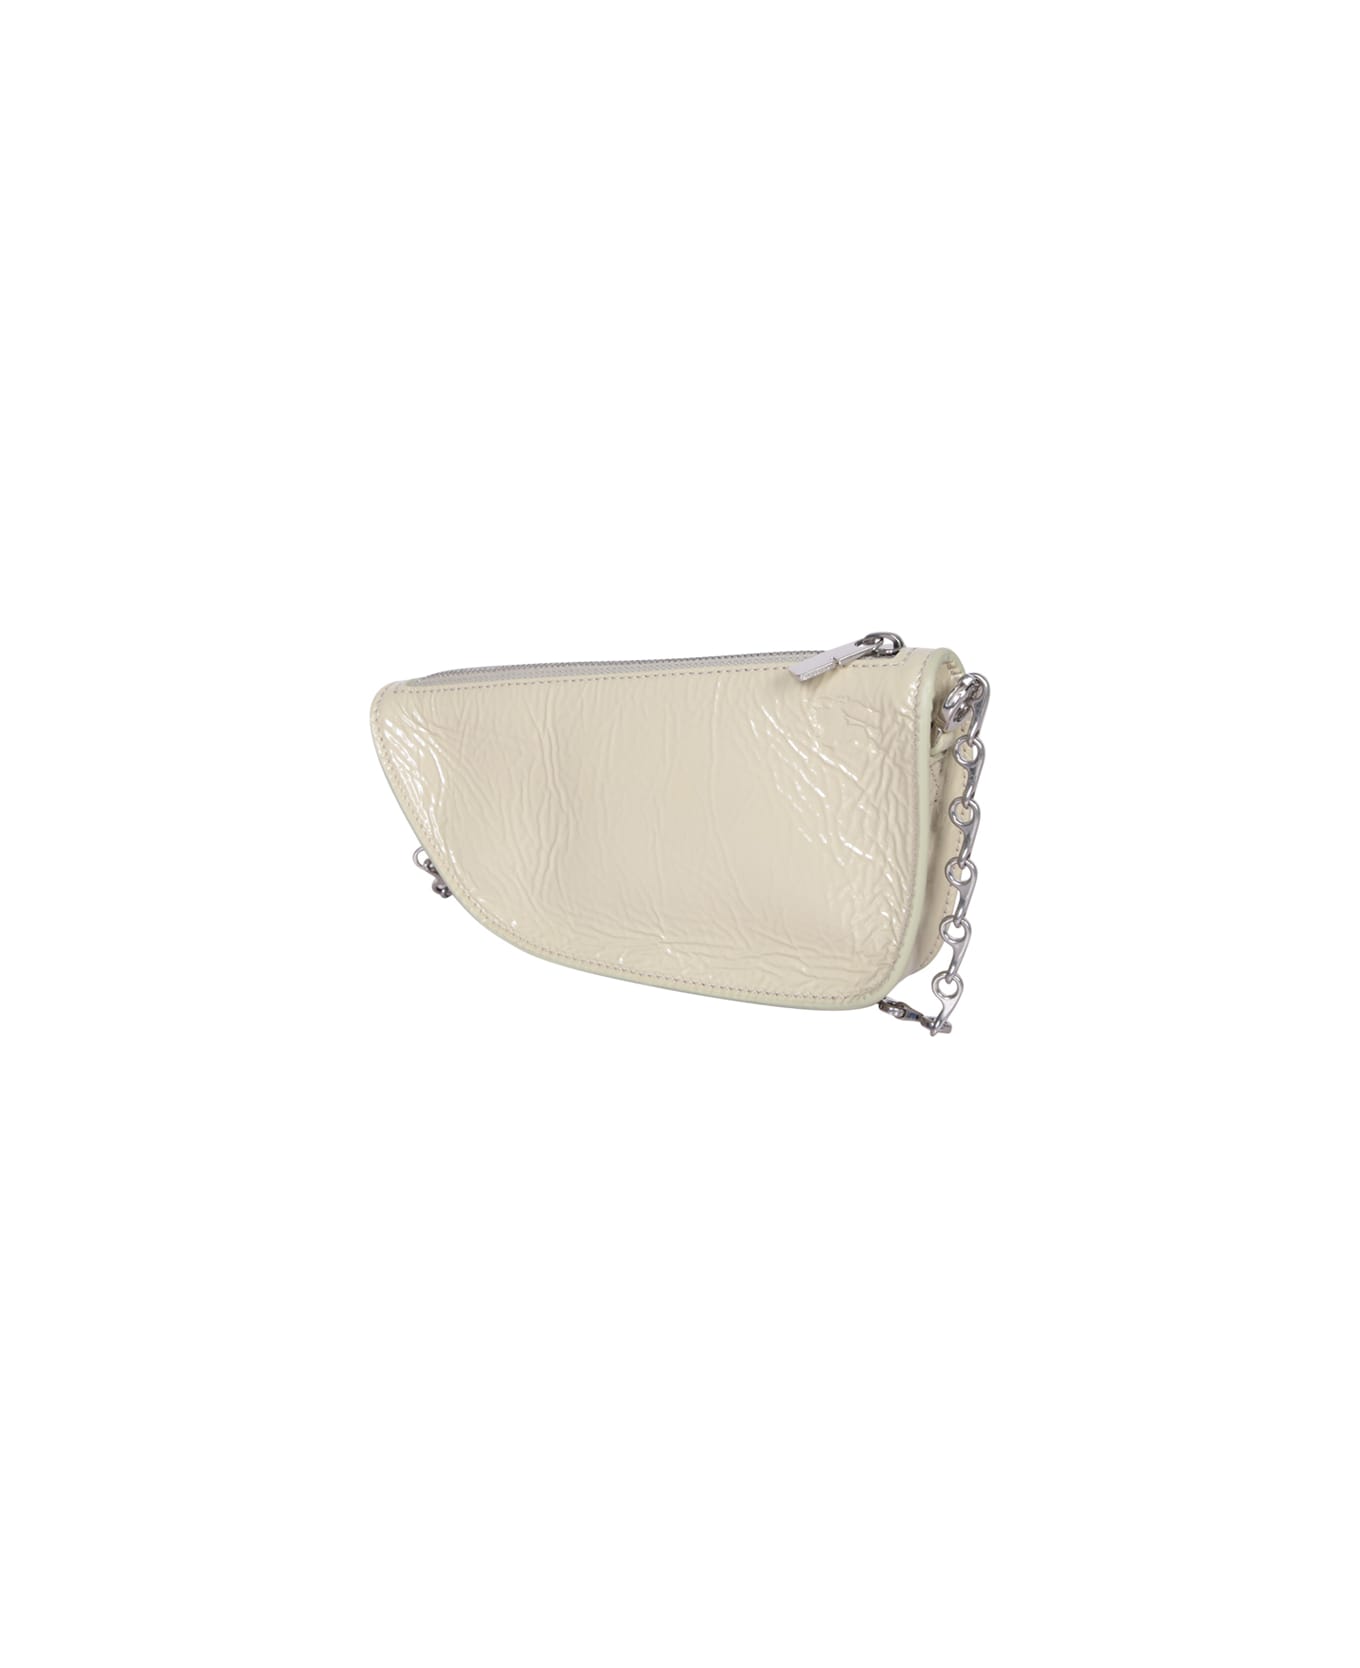 Burberry Wmls Micro Sling Shield Crossbody Bag - Beige